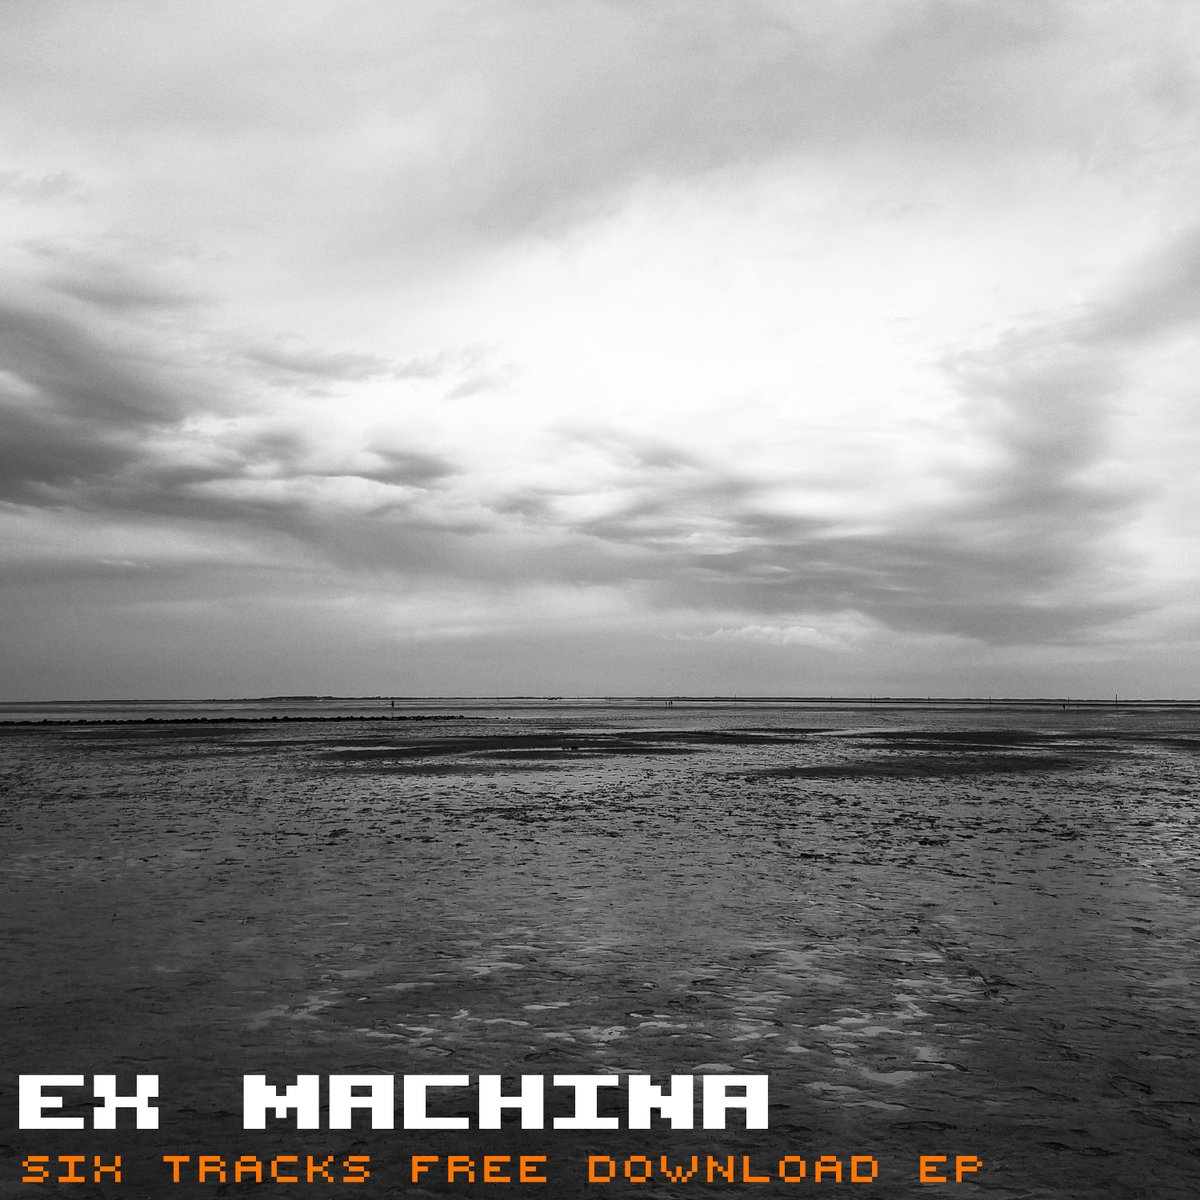 ex machina - six tracks free download EP #freedownload #freemusic #music #synthwave #retrowave #darkwave #alternative #synthpop #electronicmusic #synthesizer exmachinaproject.com/listen-to-ex-m…